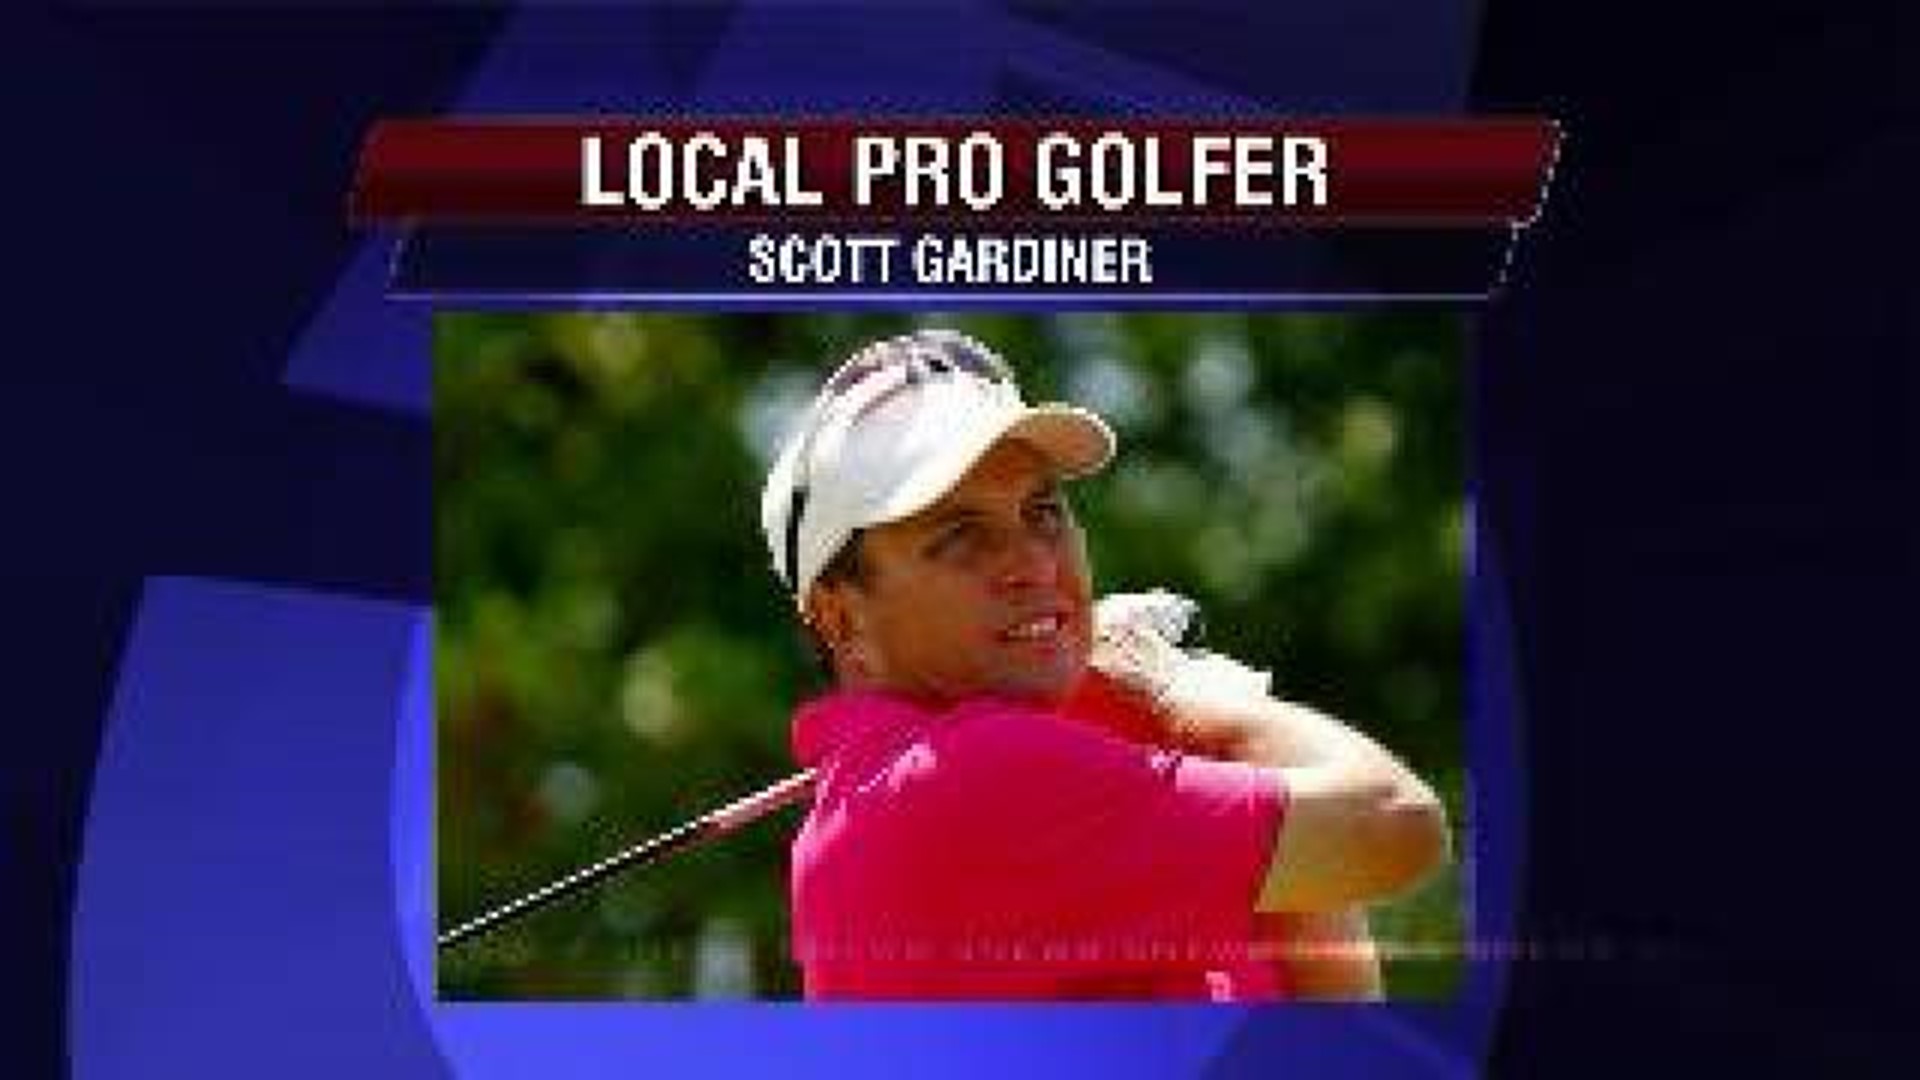 Local Pro Golfer Joins PGA Tour